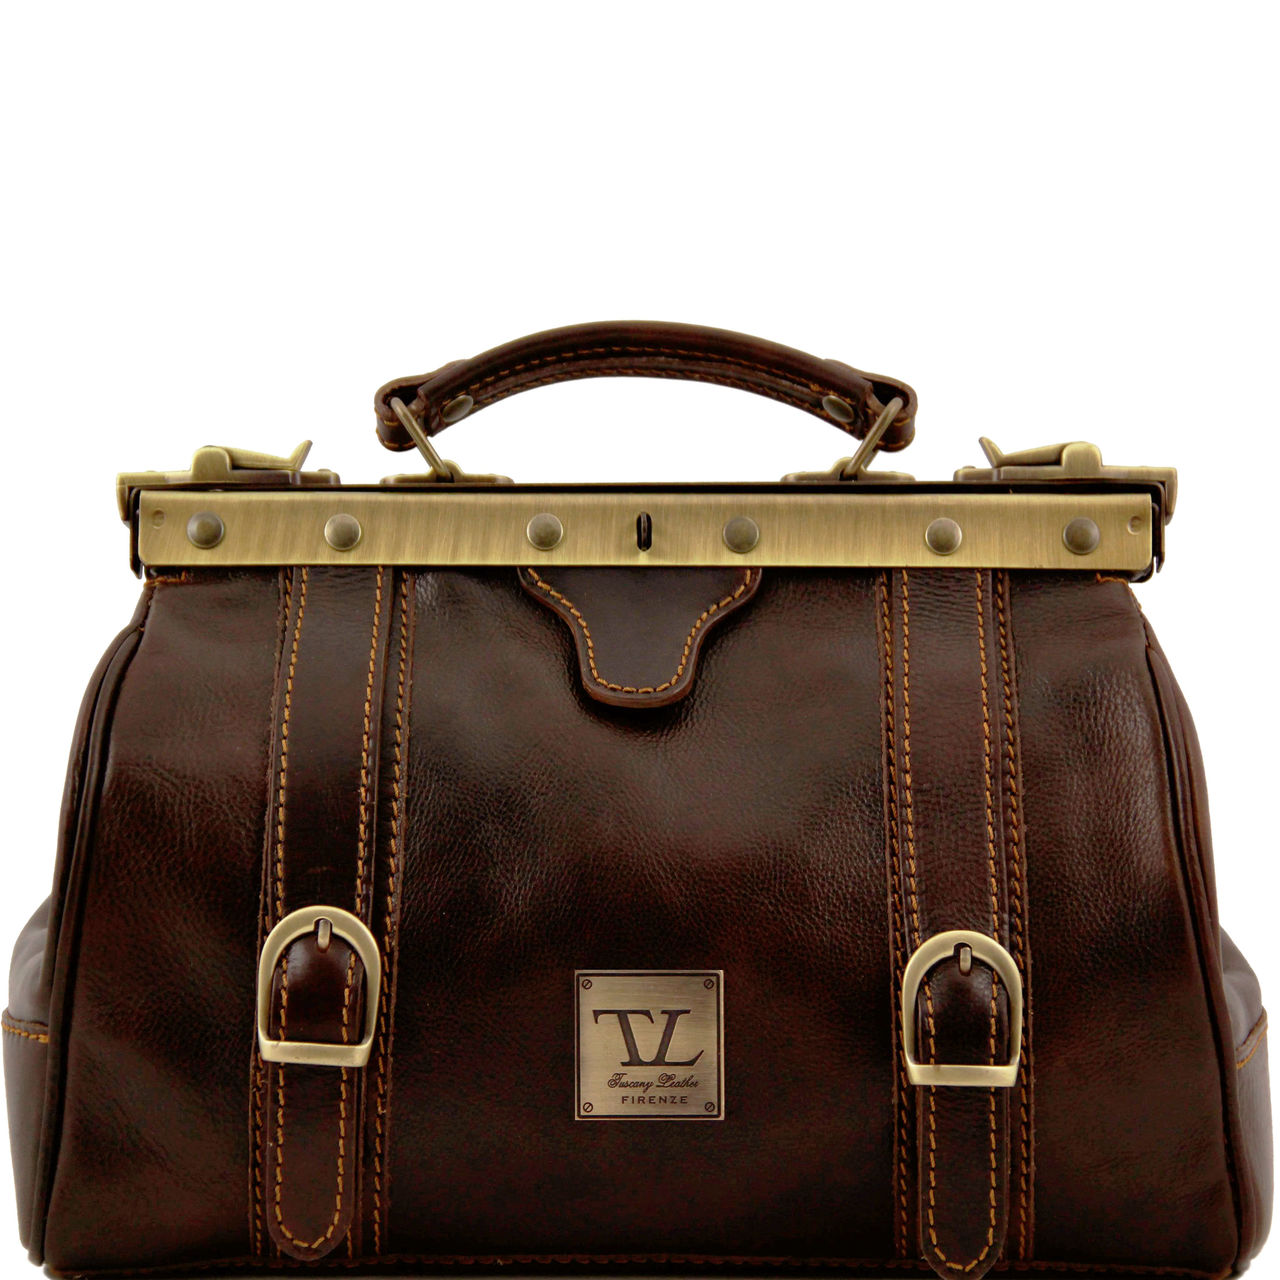 Louis Vuitton monogram suitcase with dust cover $2999 RRP $4750